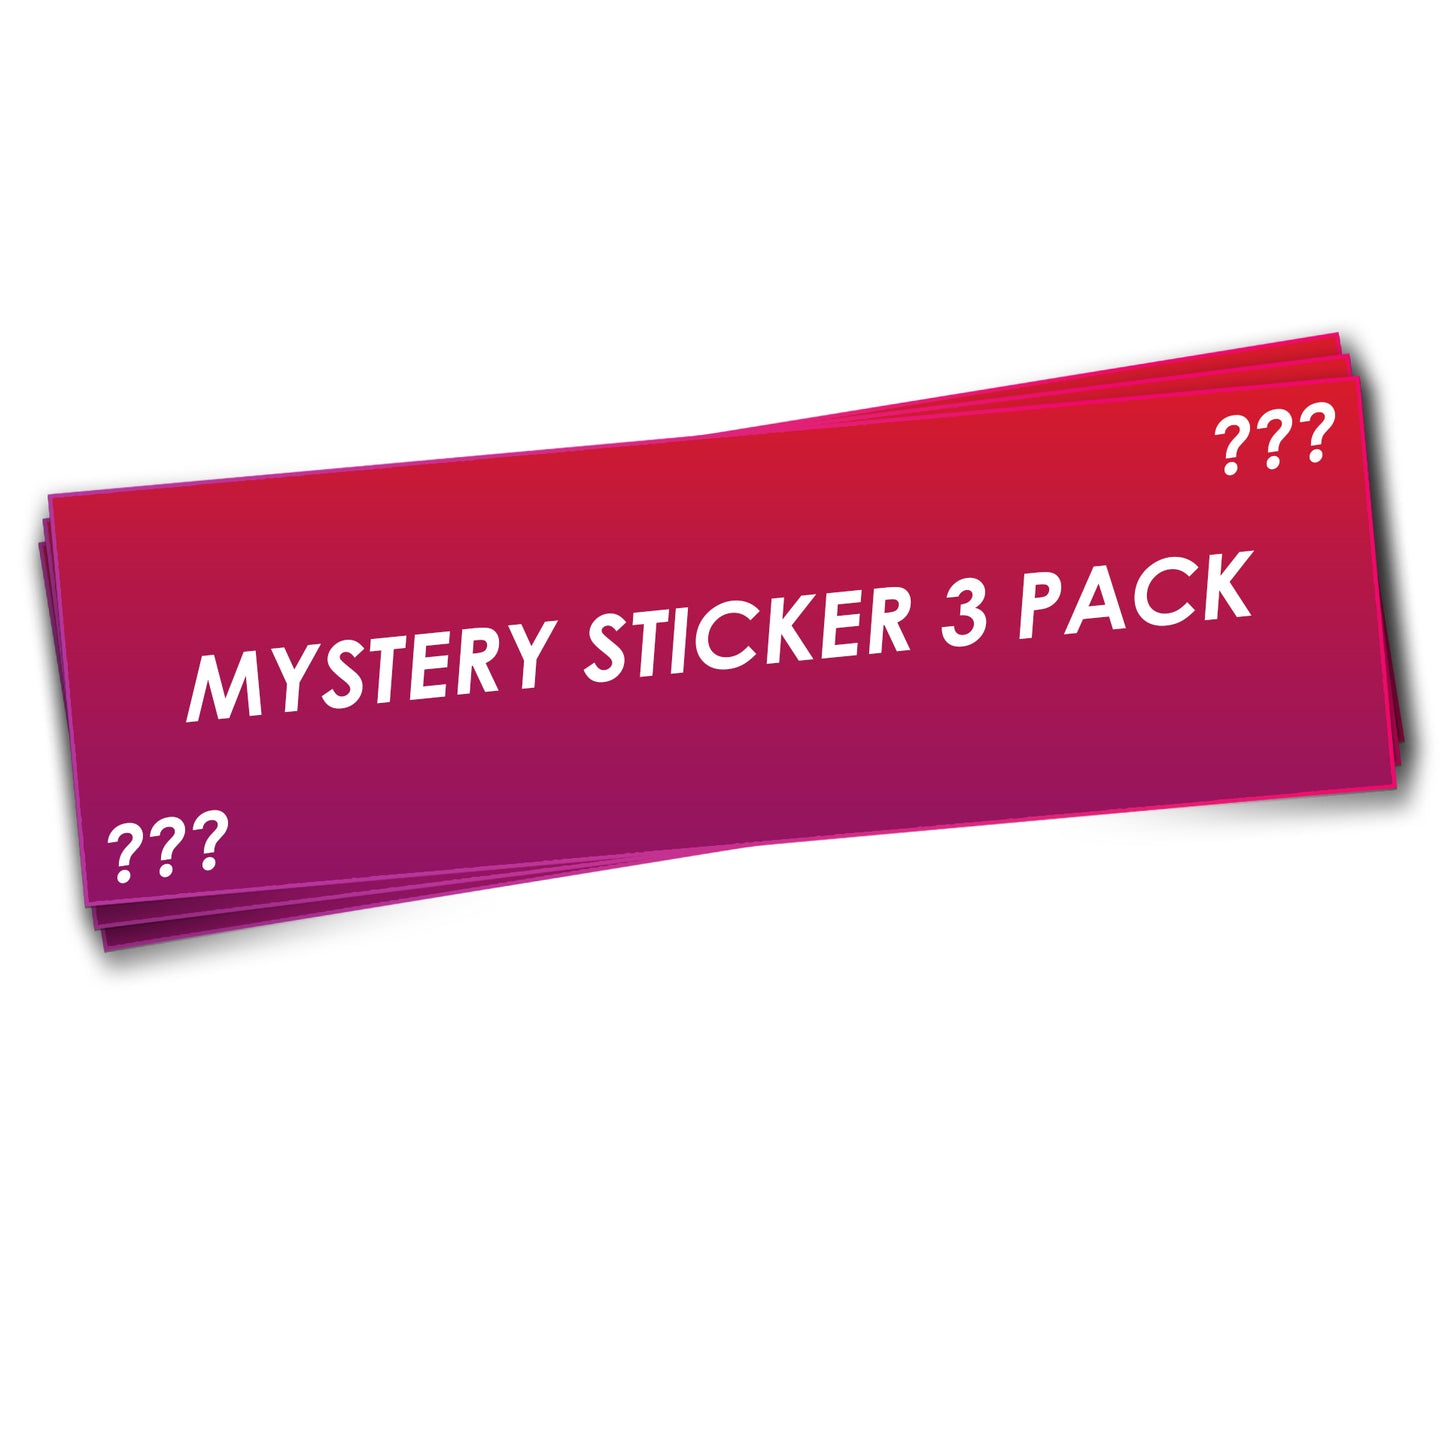 MYSTERY STICKER PACK